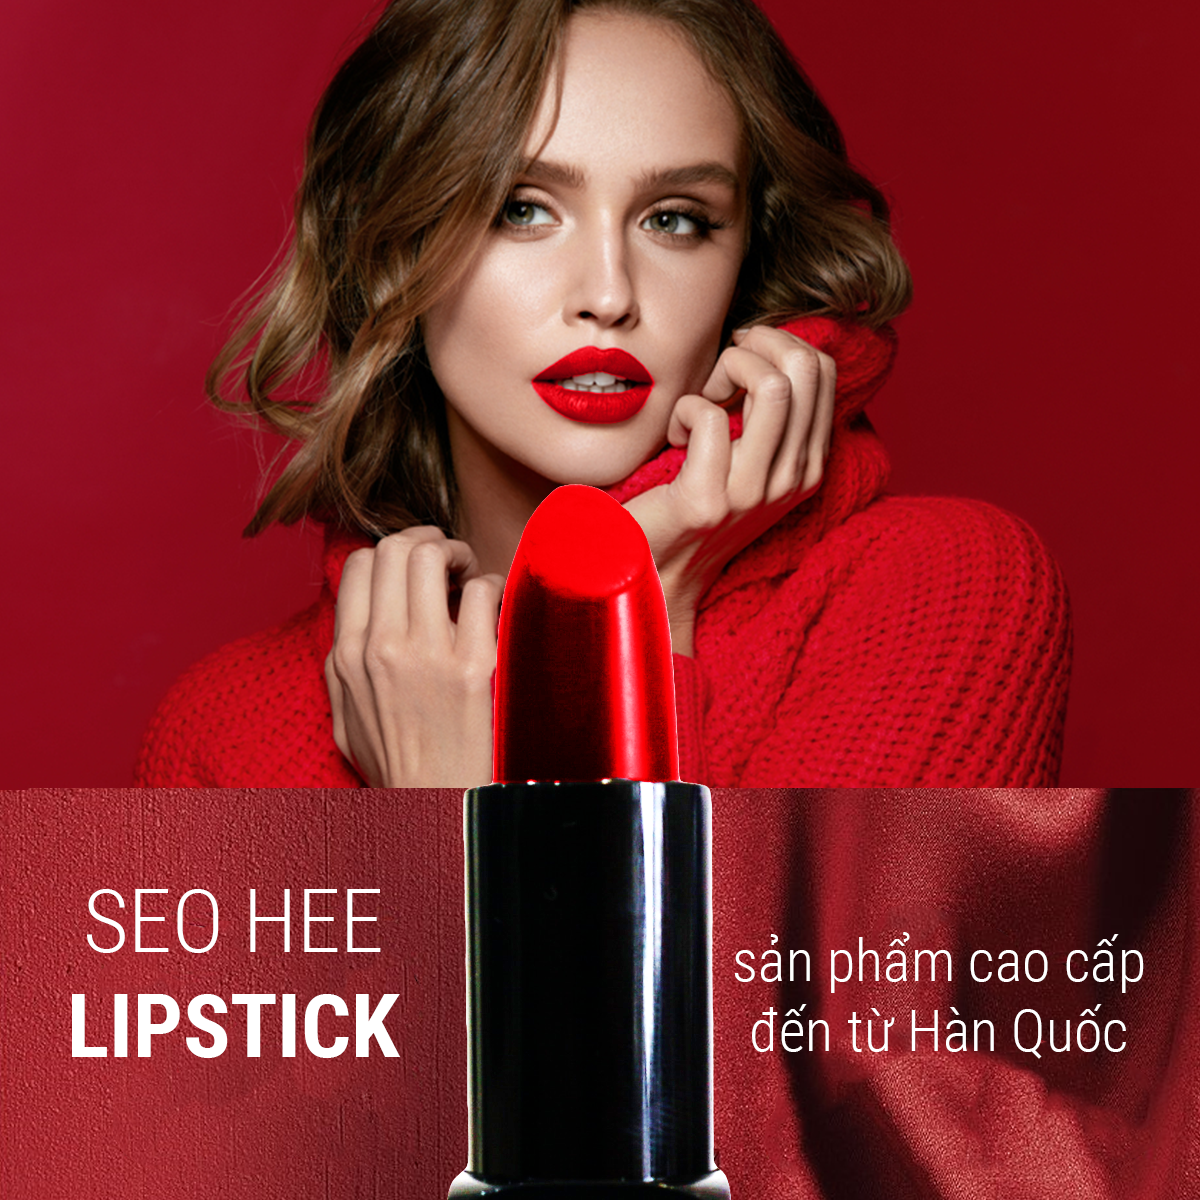 Son môi Seo Hee Premium Lipstick